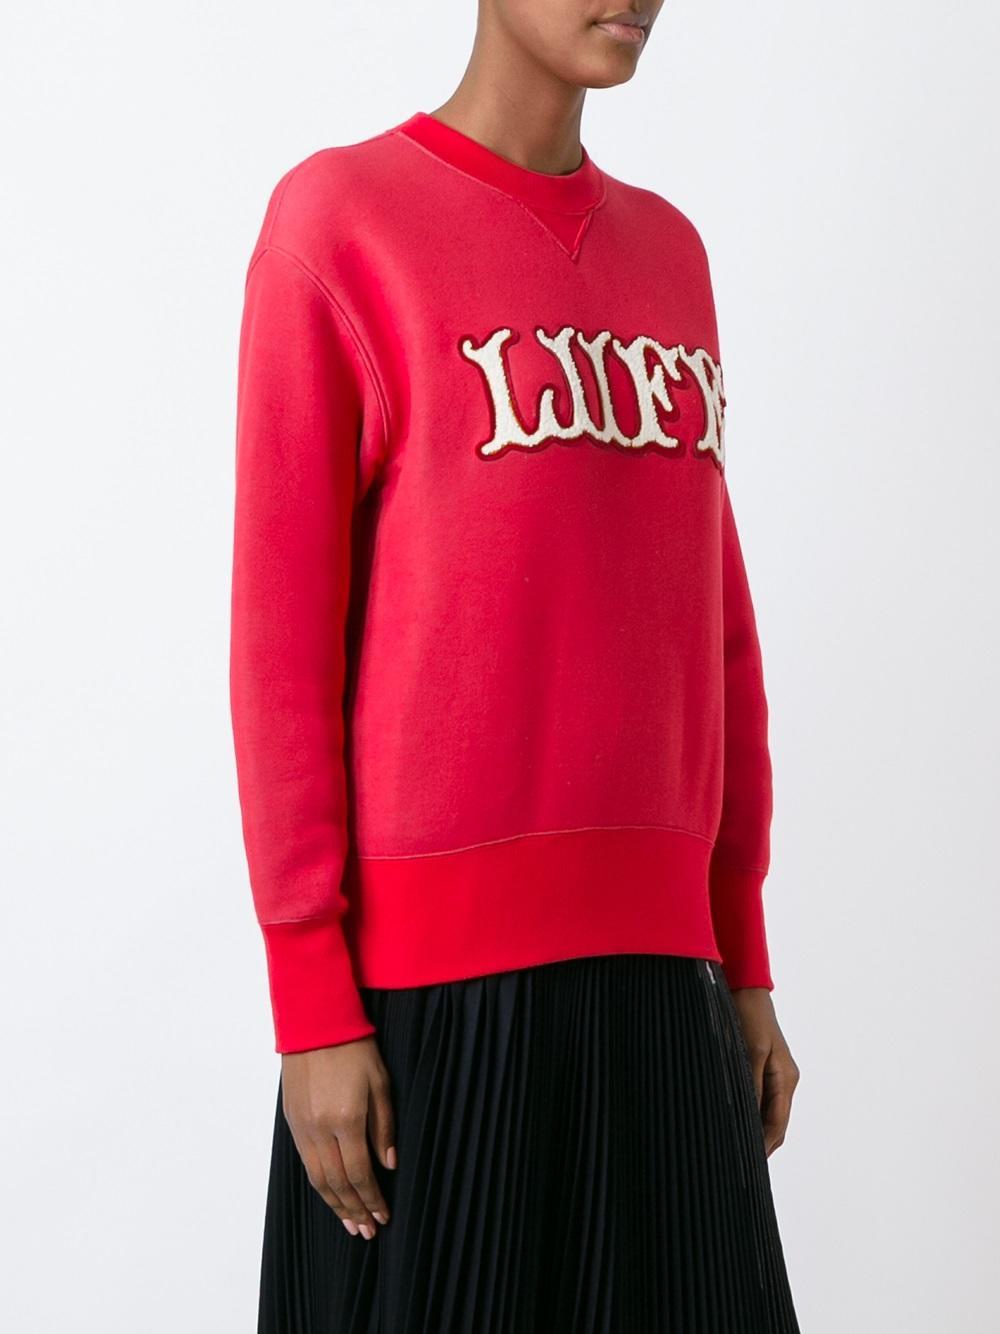 Lyst - Sacai 'liife' Sweatshirt in Red